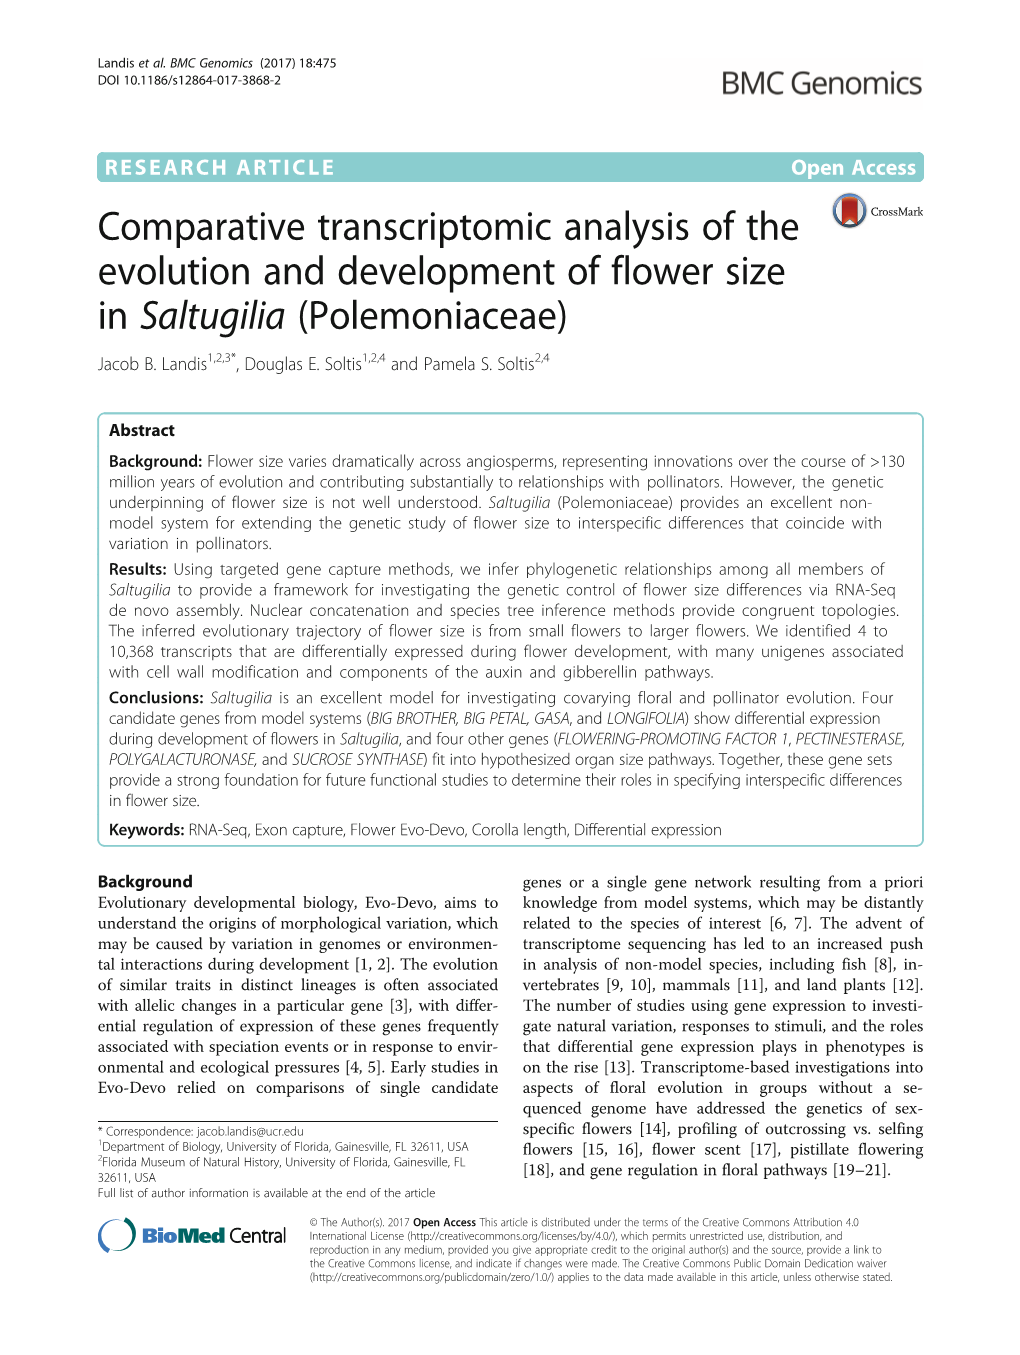 Comparative Transcriptomic Analysis of the Evolution and Development of Flower Size in Saltugilia (Polemoniaceae) Jacob B